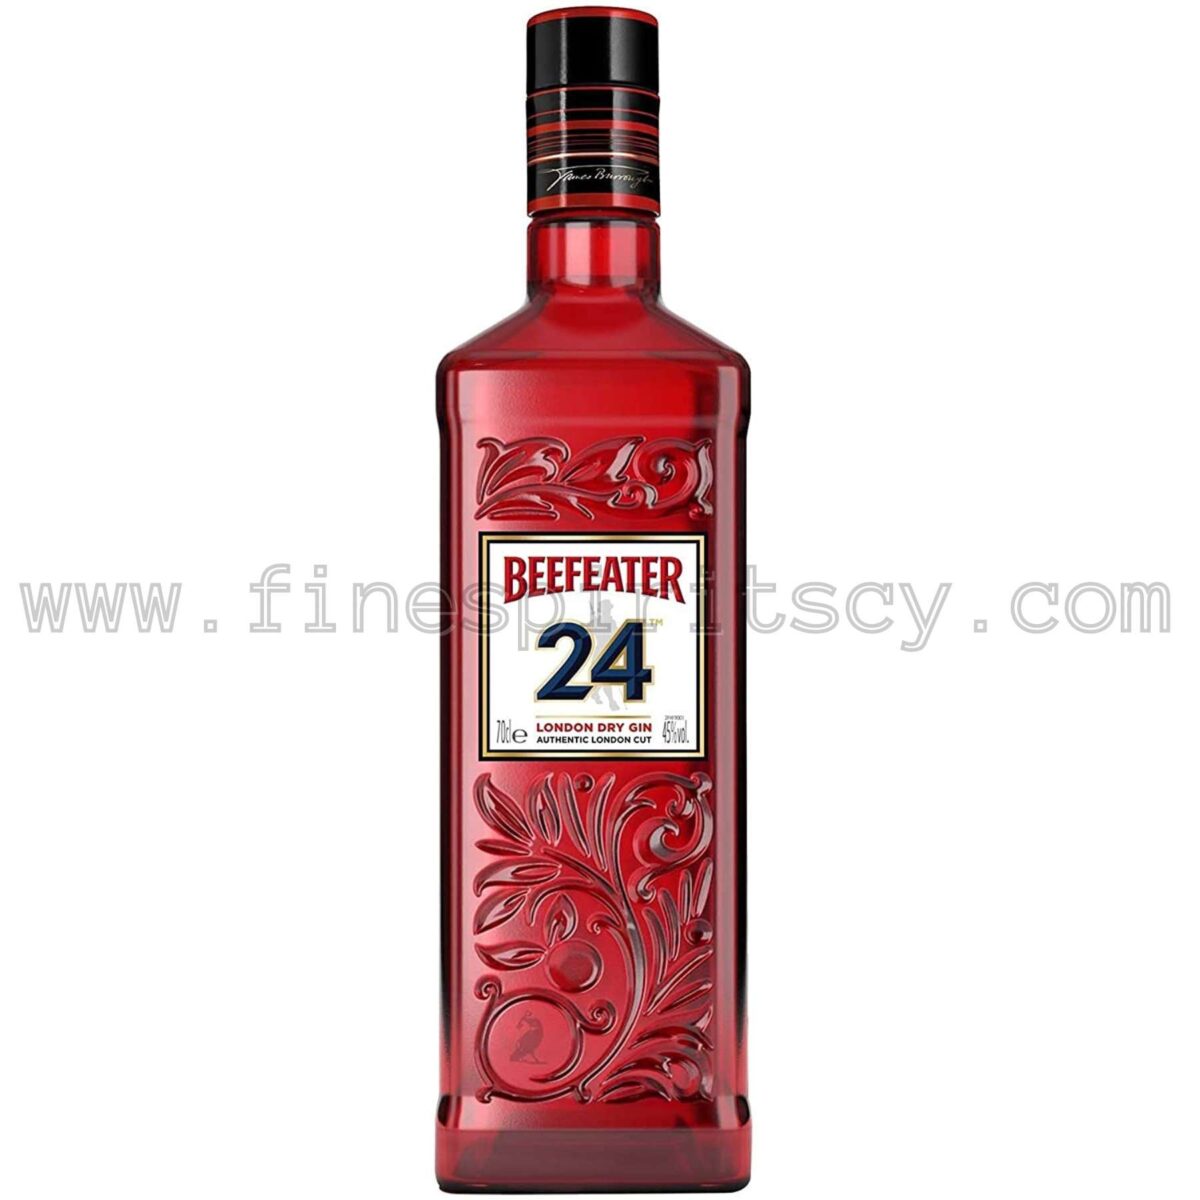 Beefeater 24 London Dry 700ml 70cl 0.7L Price Cyprus Fine Spirits FSCY Gin